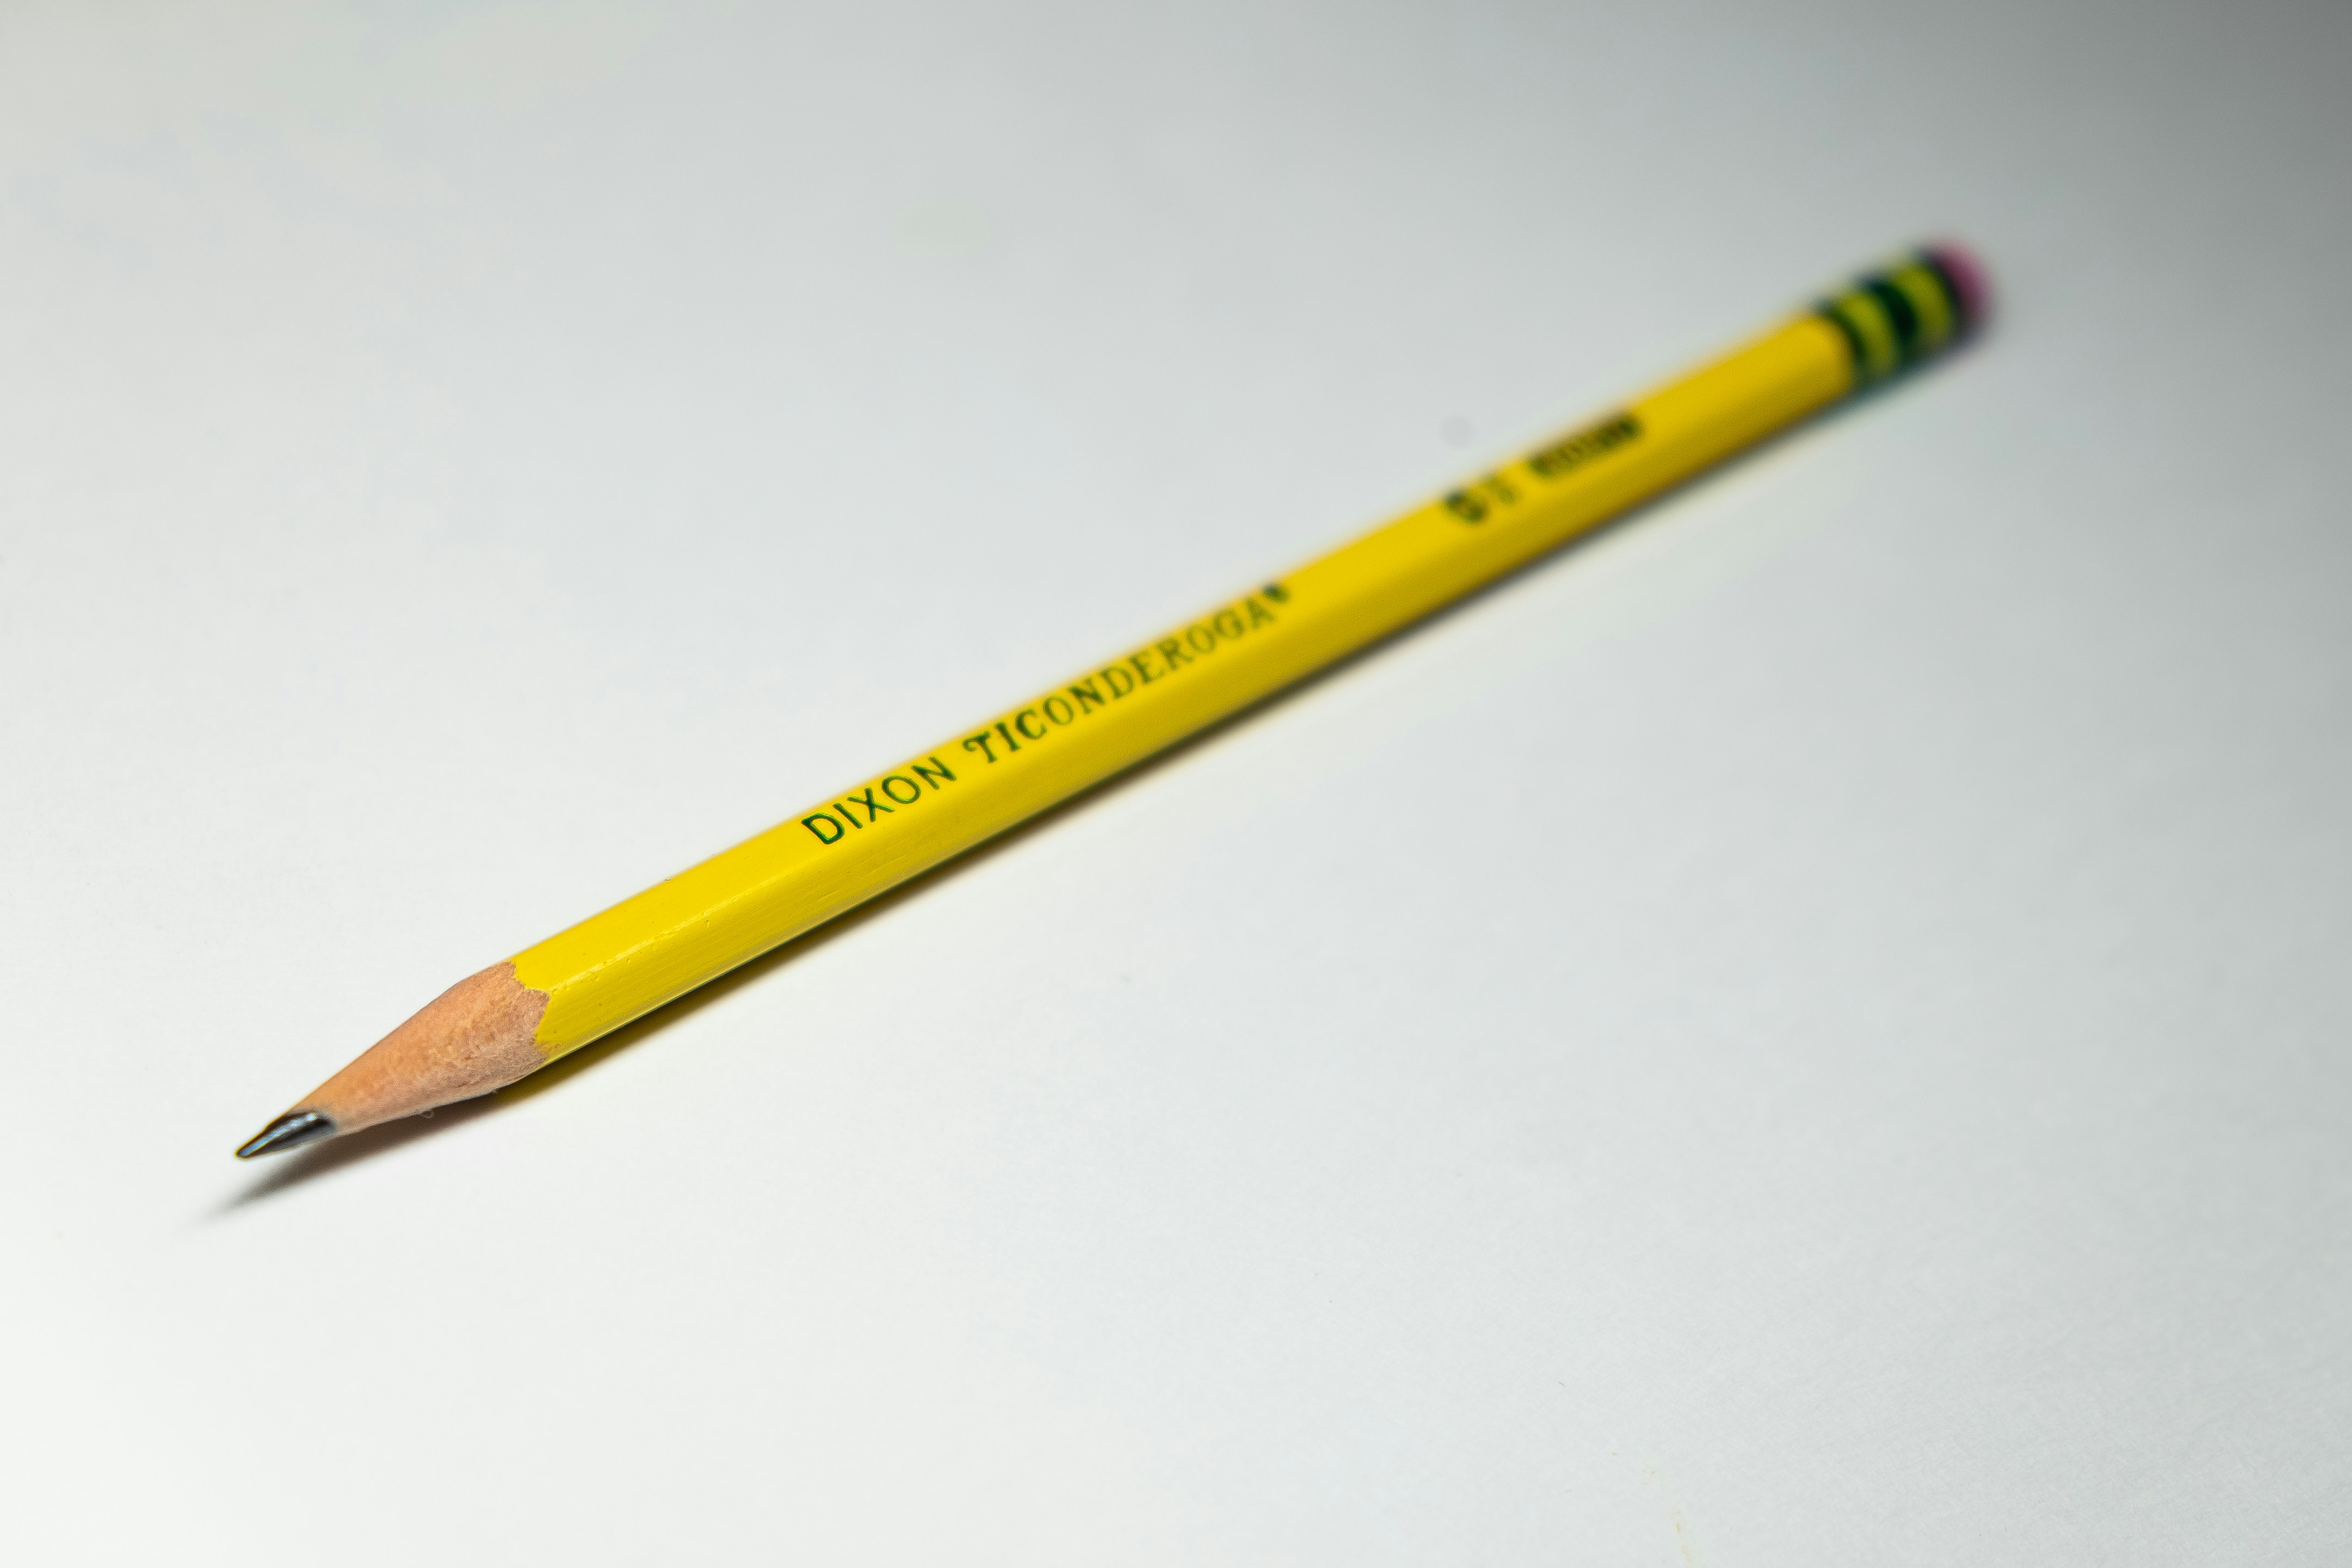 Dixon Ticonderoga pencil